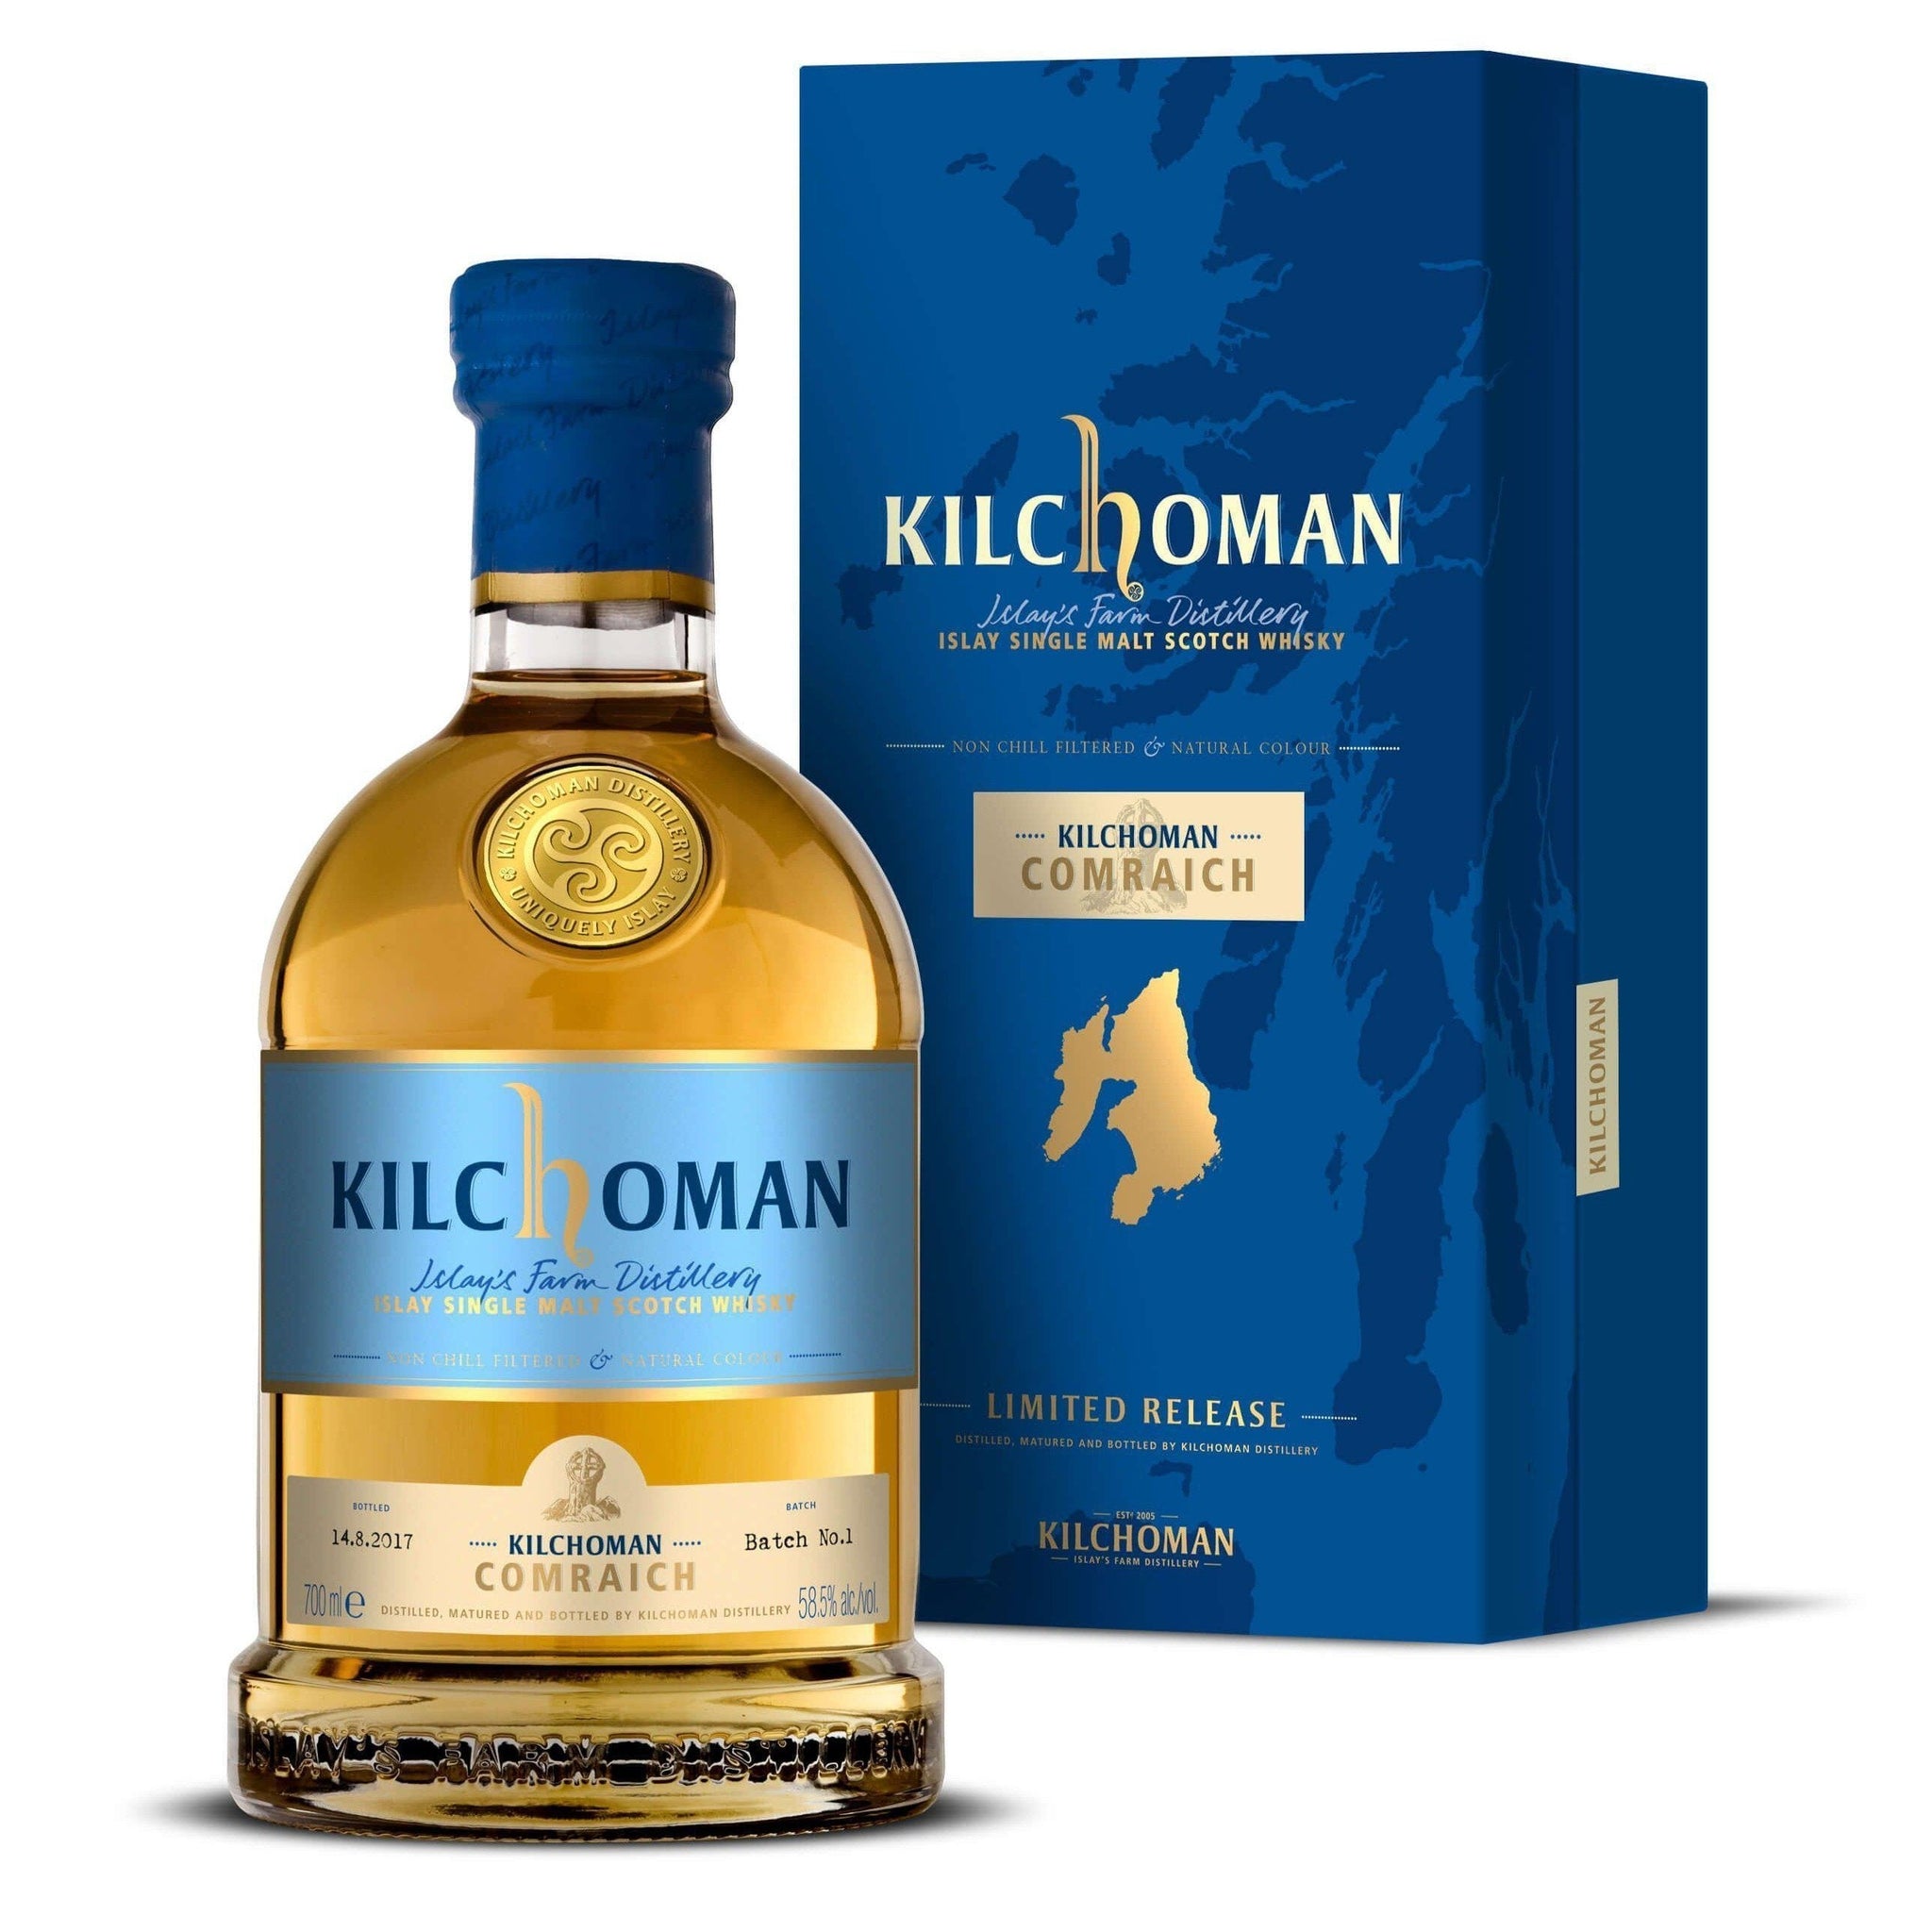 Kilchoman 2007 Comraich Islay Single Malt Scotch Whisky Batch No. 3 750ml